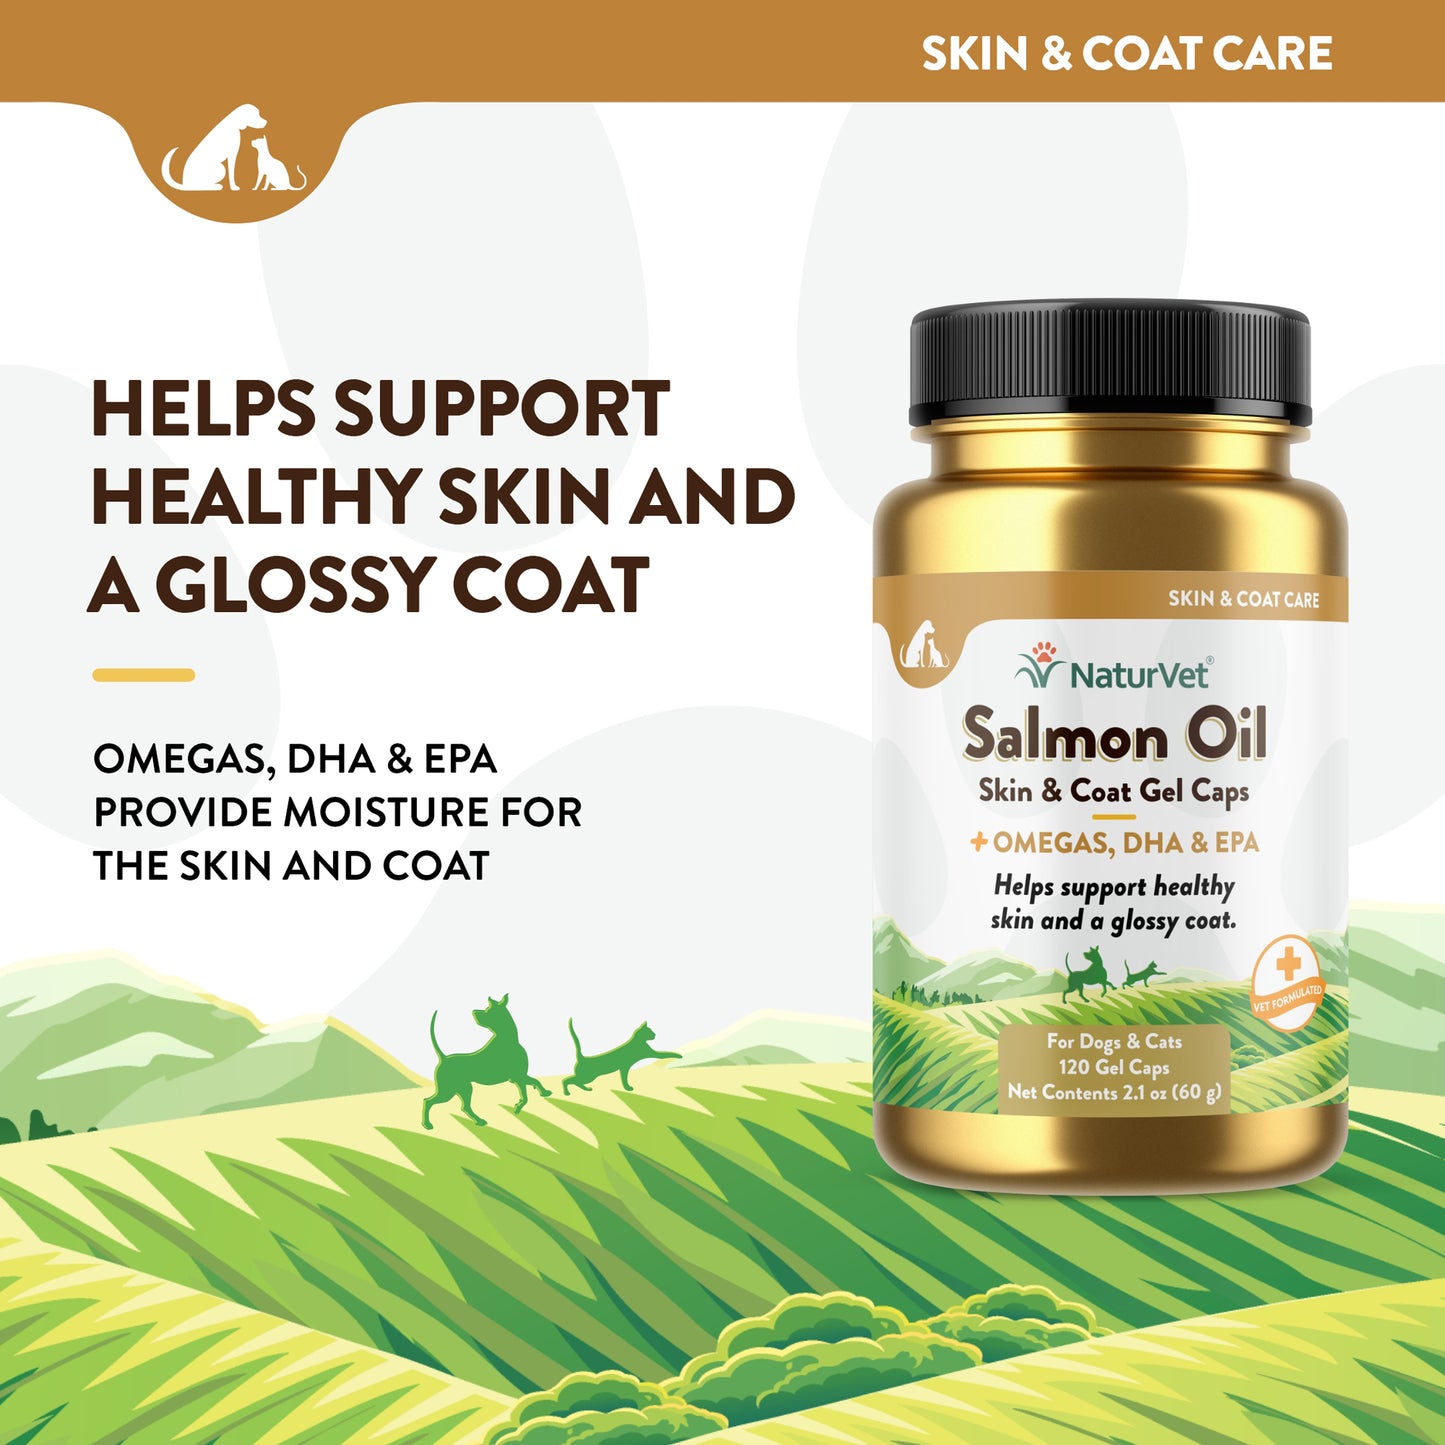 Salmon Oil Skin & Coat Gel Caps